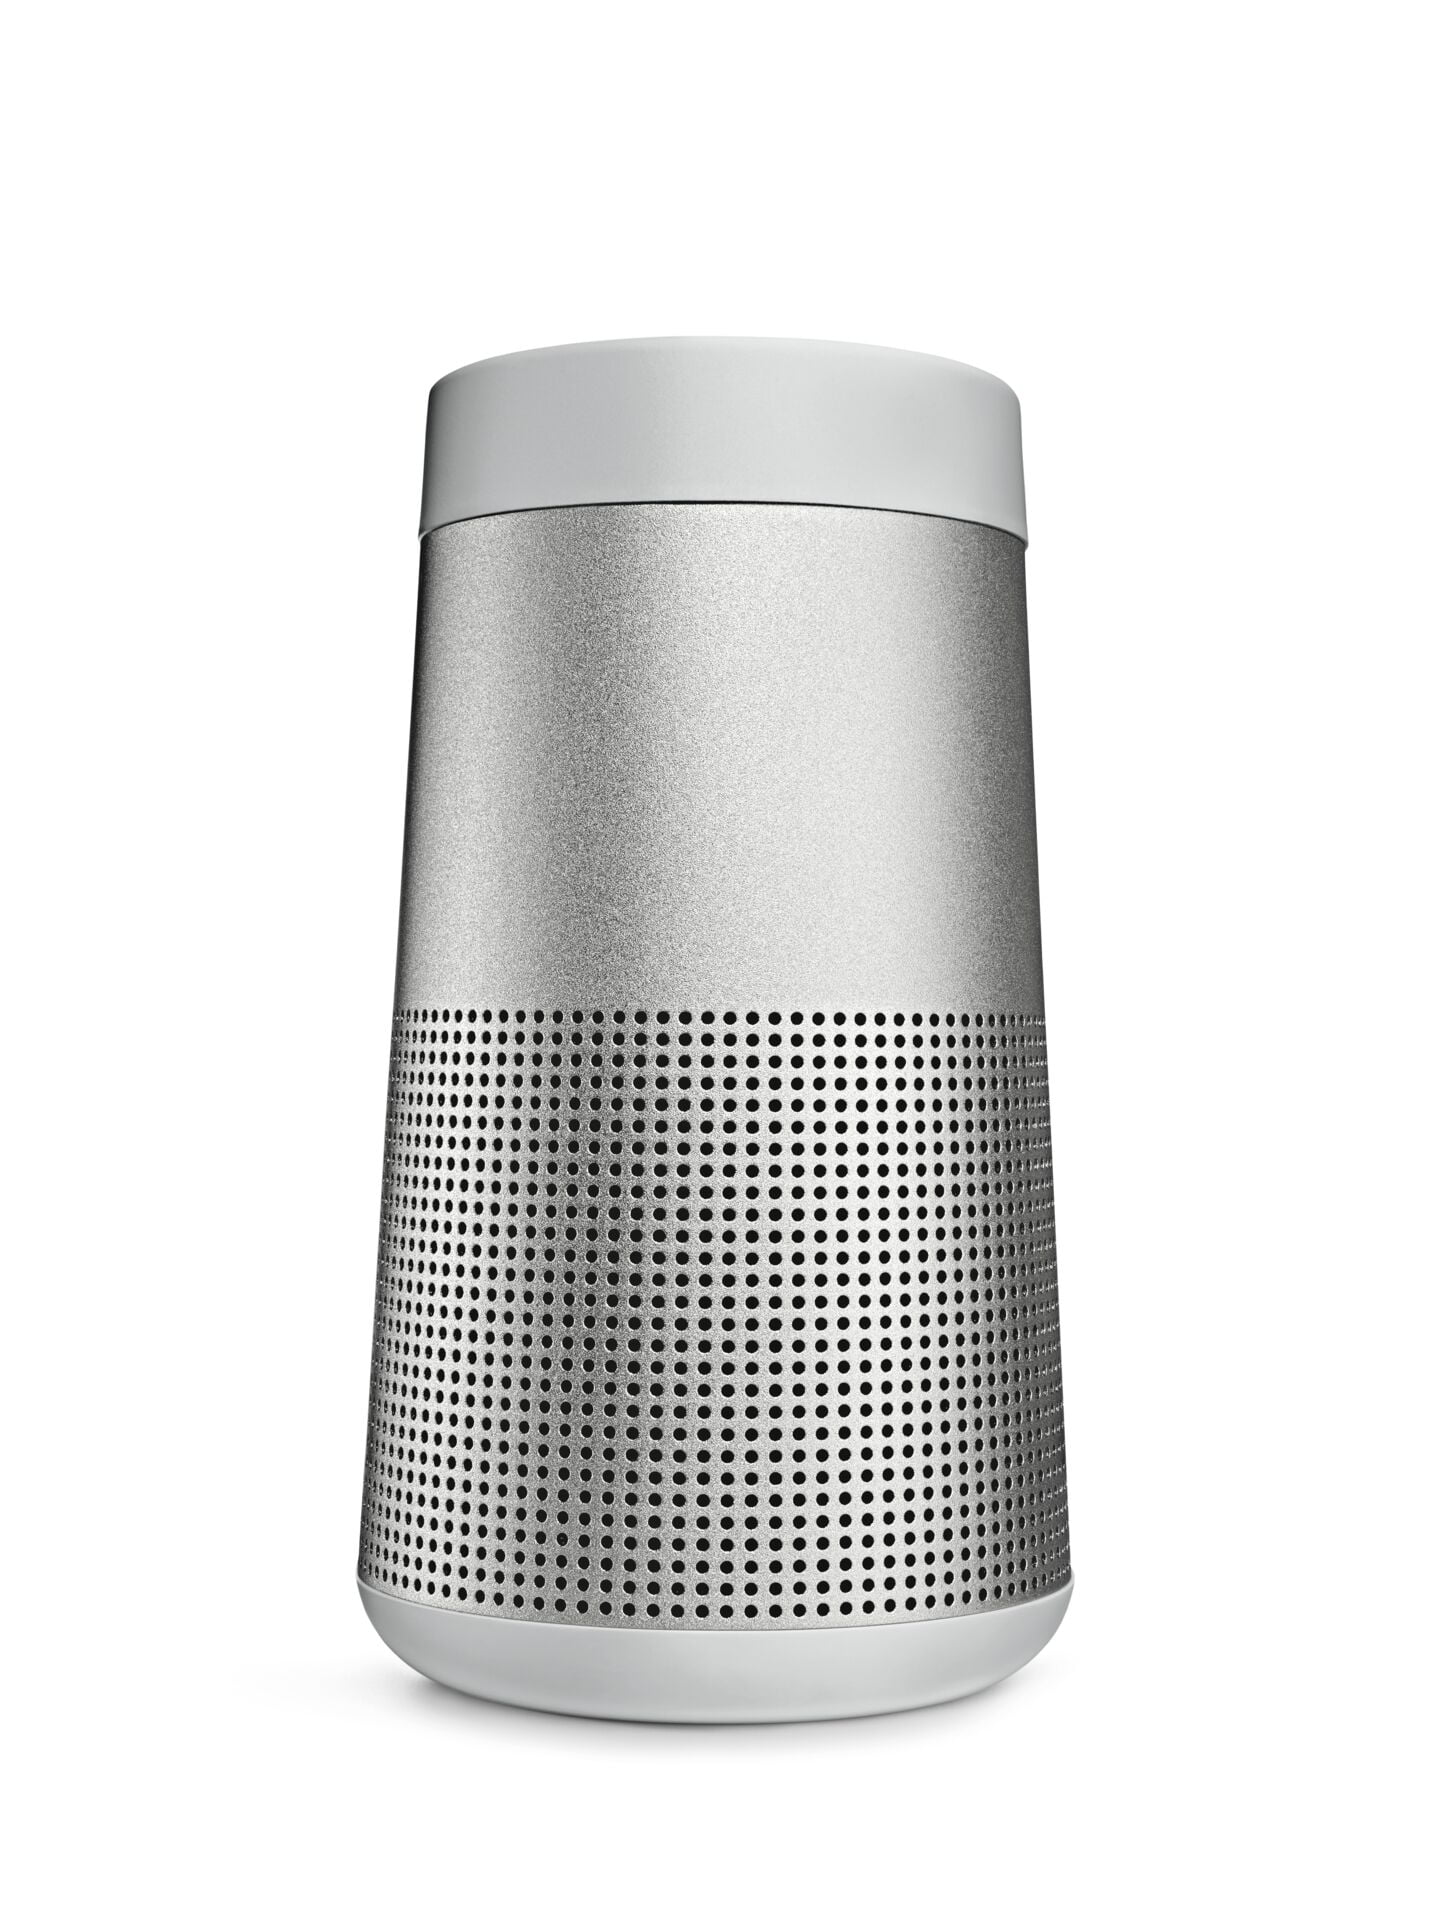 Bose SoundLink Revolve Portable Bluetooth Speaker (Series II), Silver